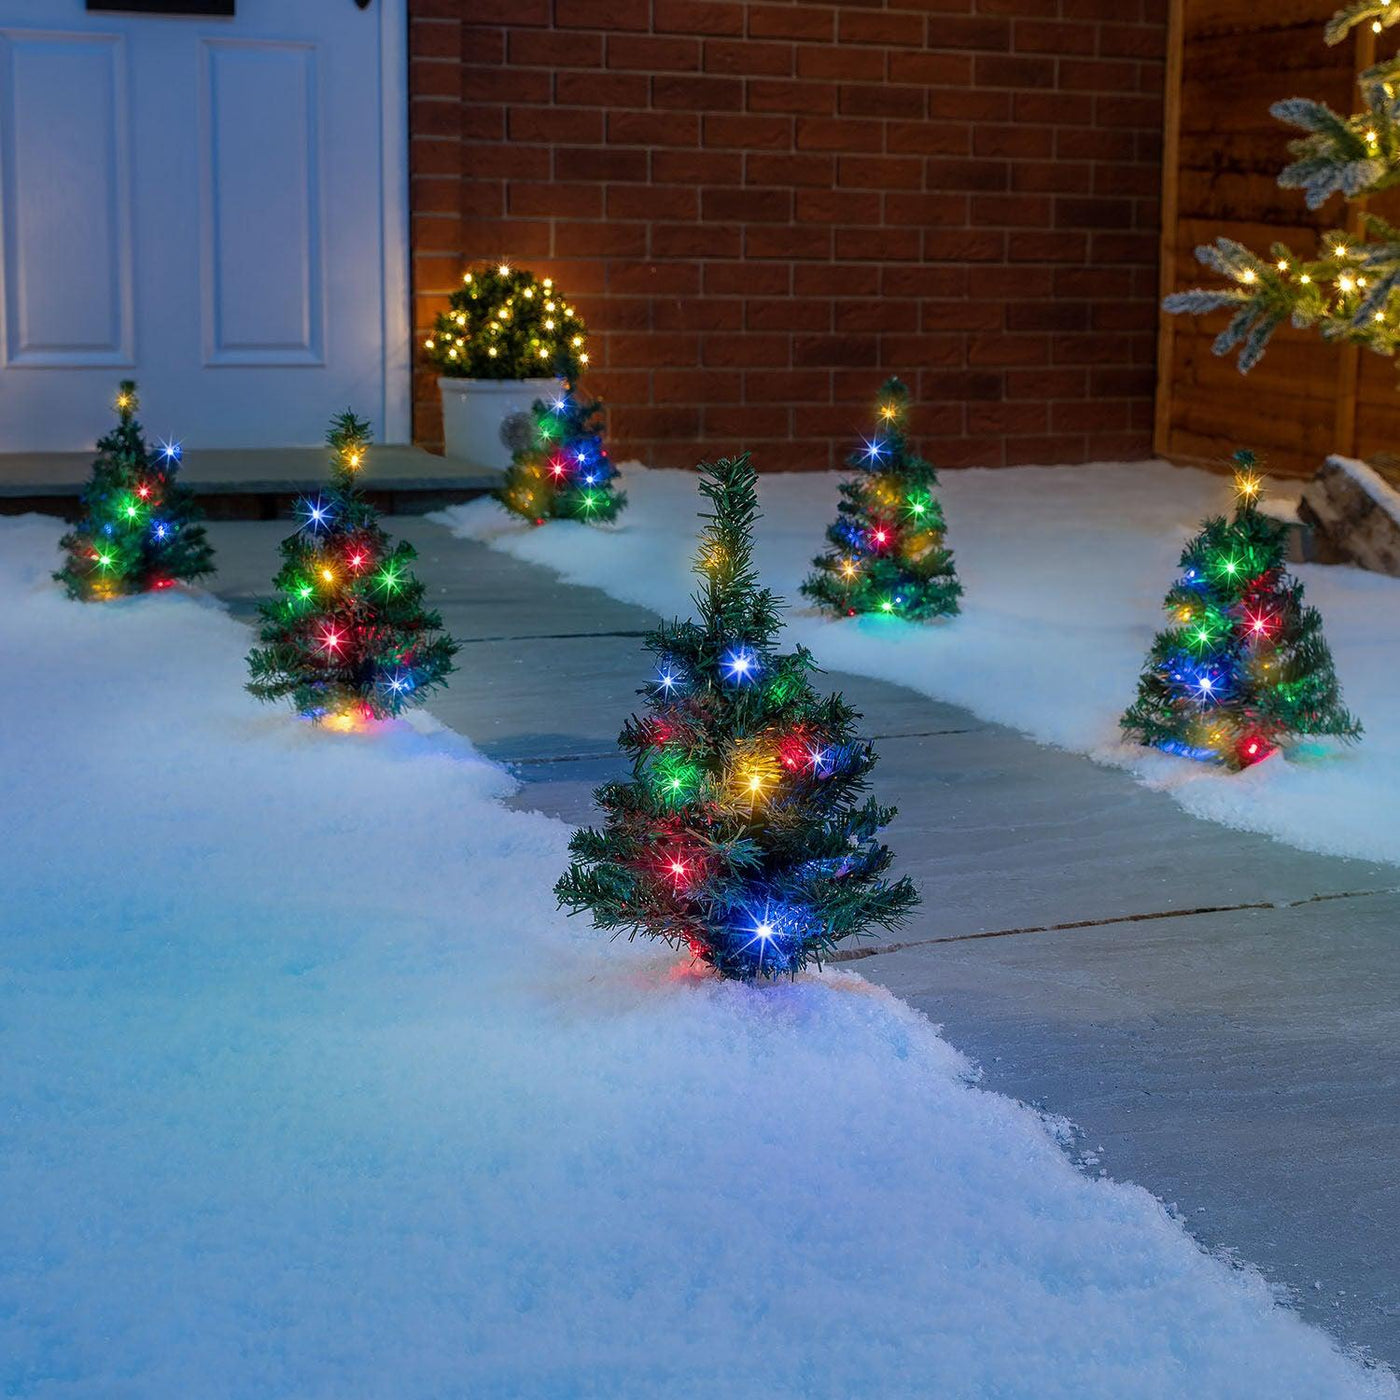 Small Christmas Tree Path Lights (Multi Colour) 6 Pcs - Massive Discounts